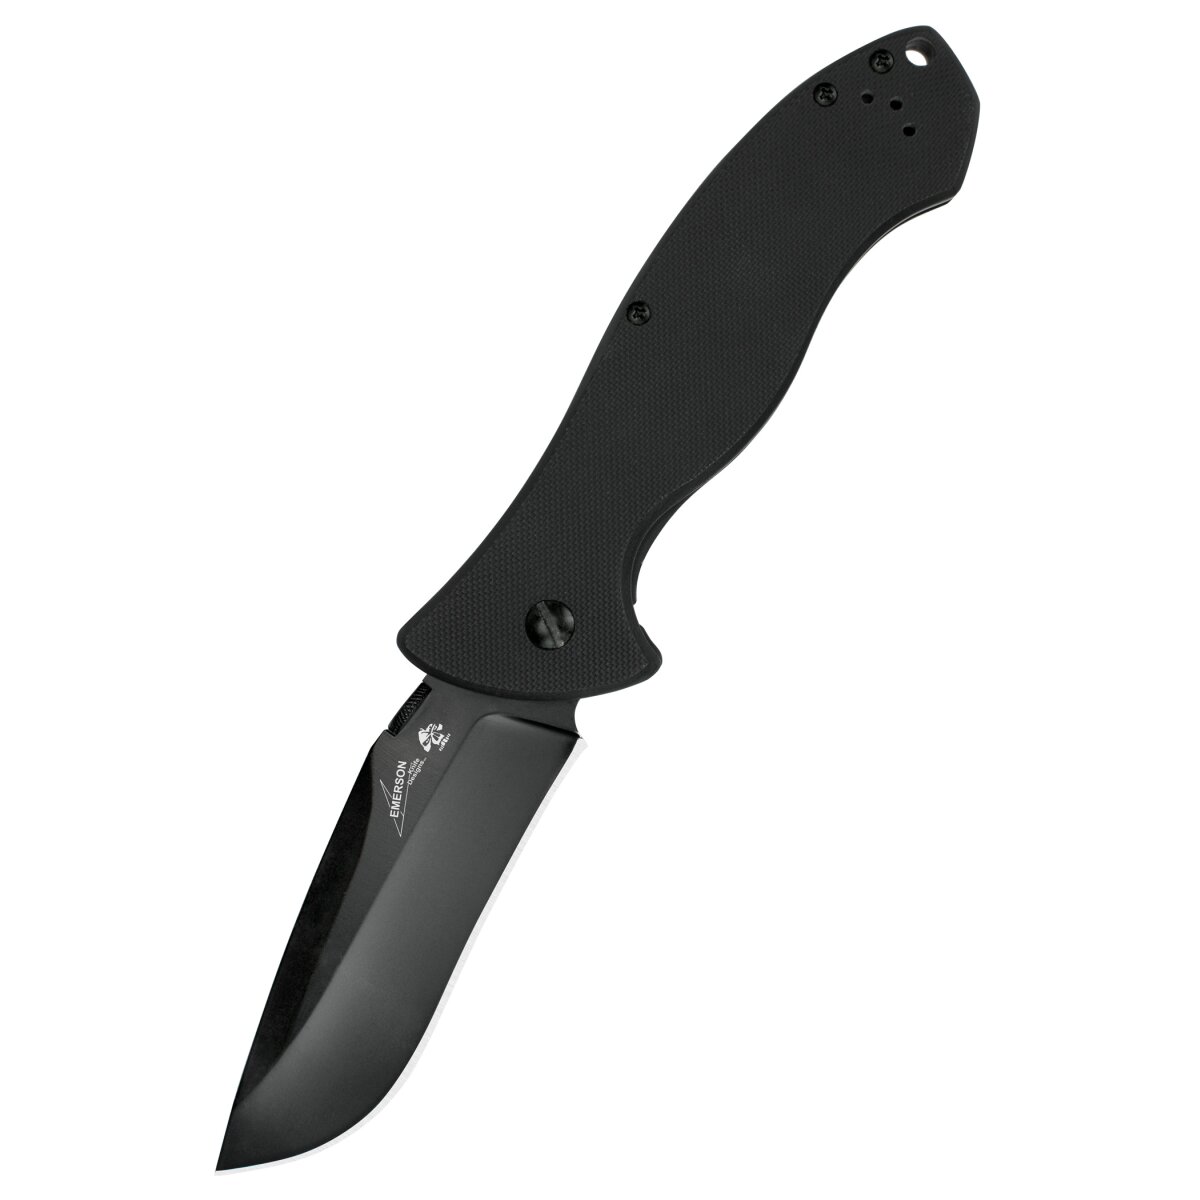 Pocket knife Kershaw Emerson CQC-9K